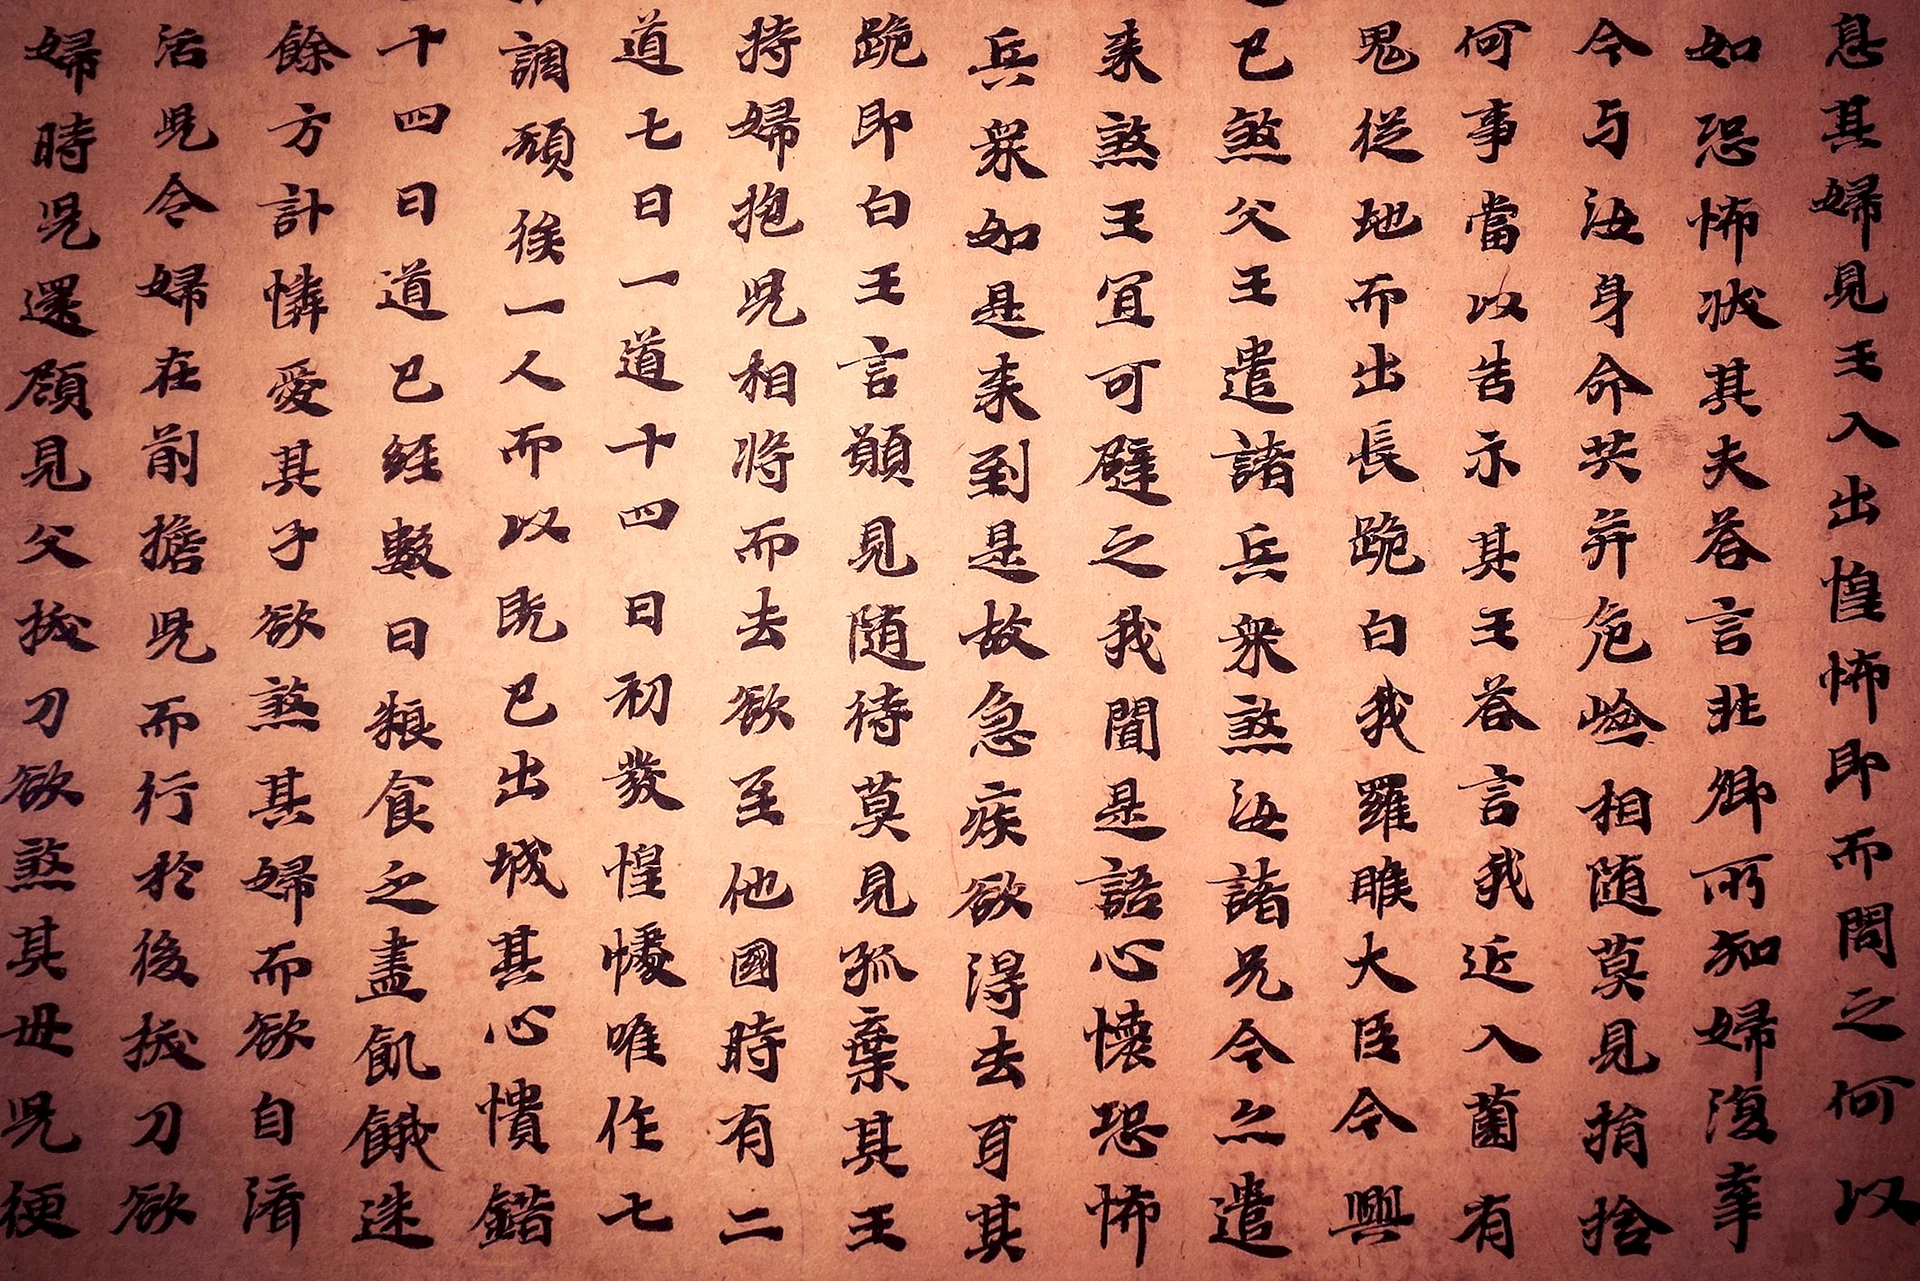 Ancient Chinese writing Wallpaper